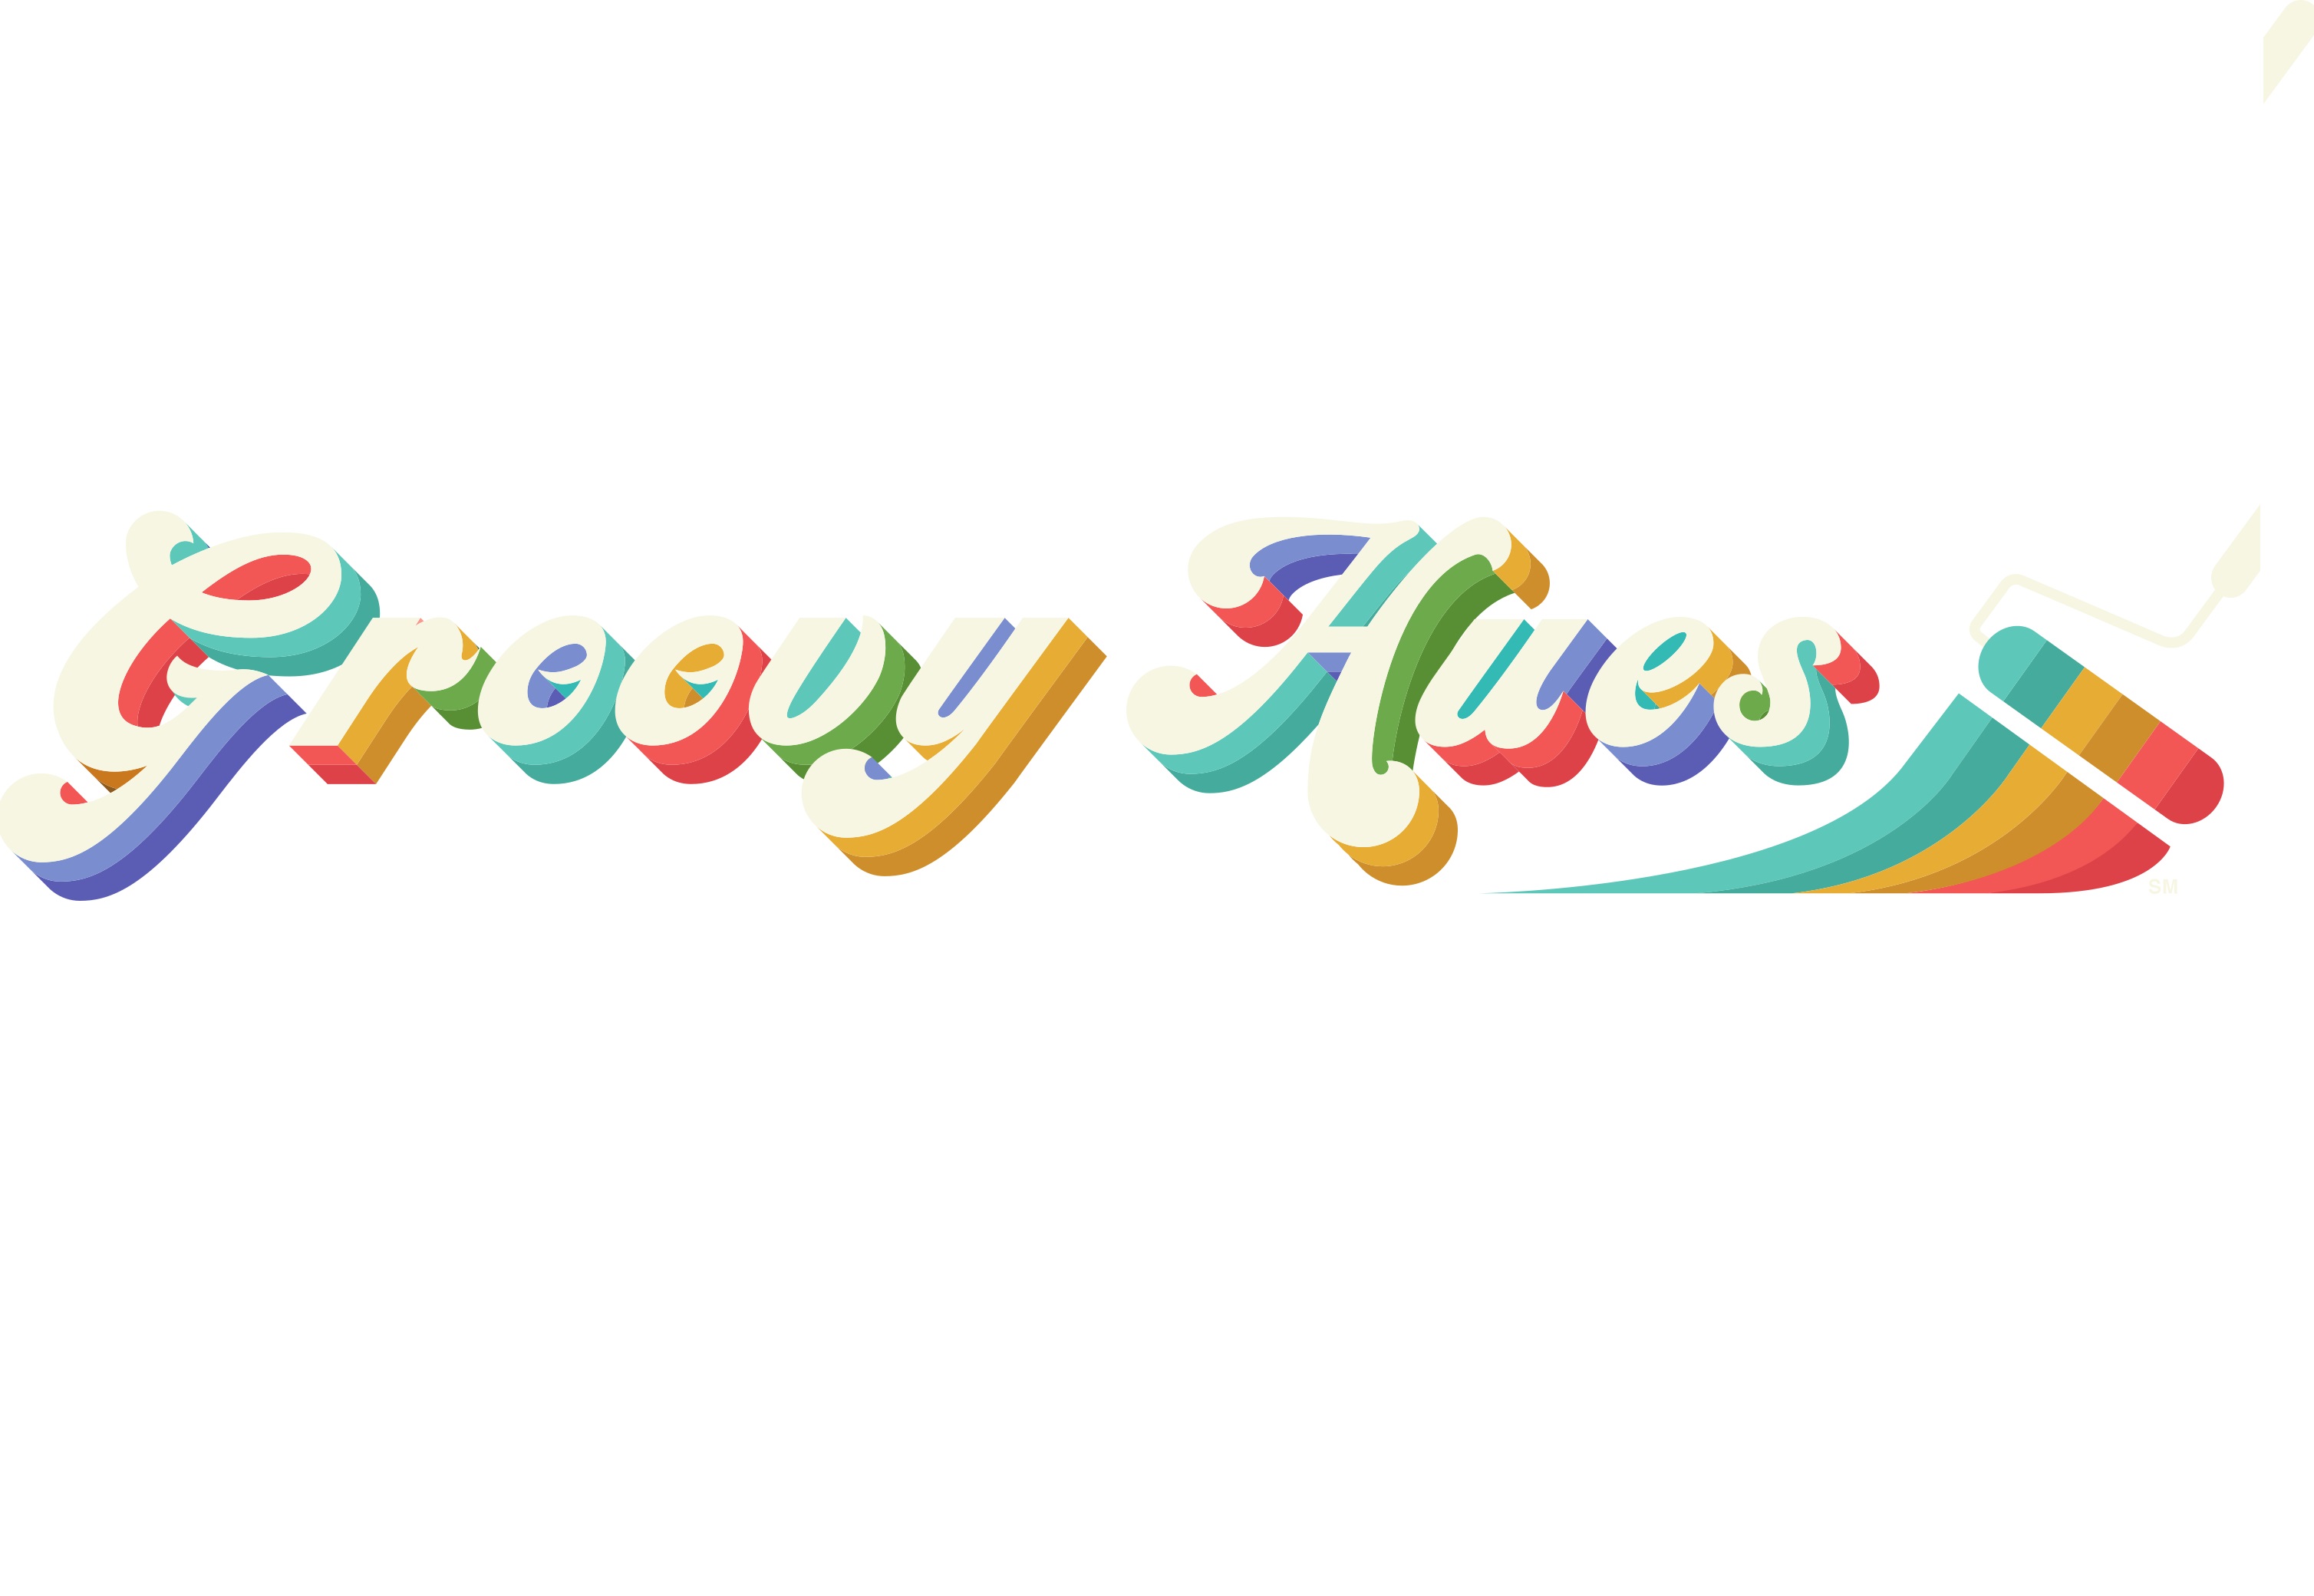 Groovy-logo2-2.jpg